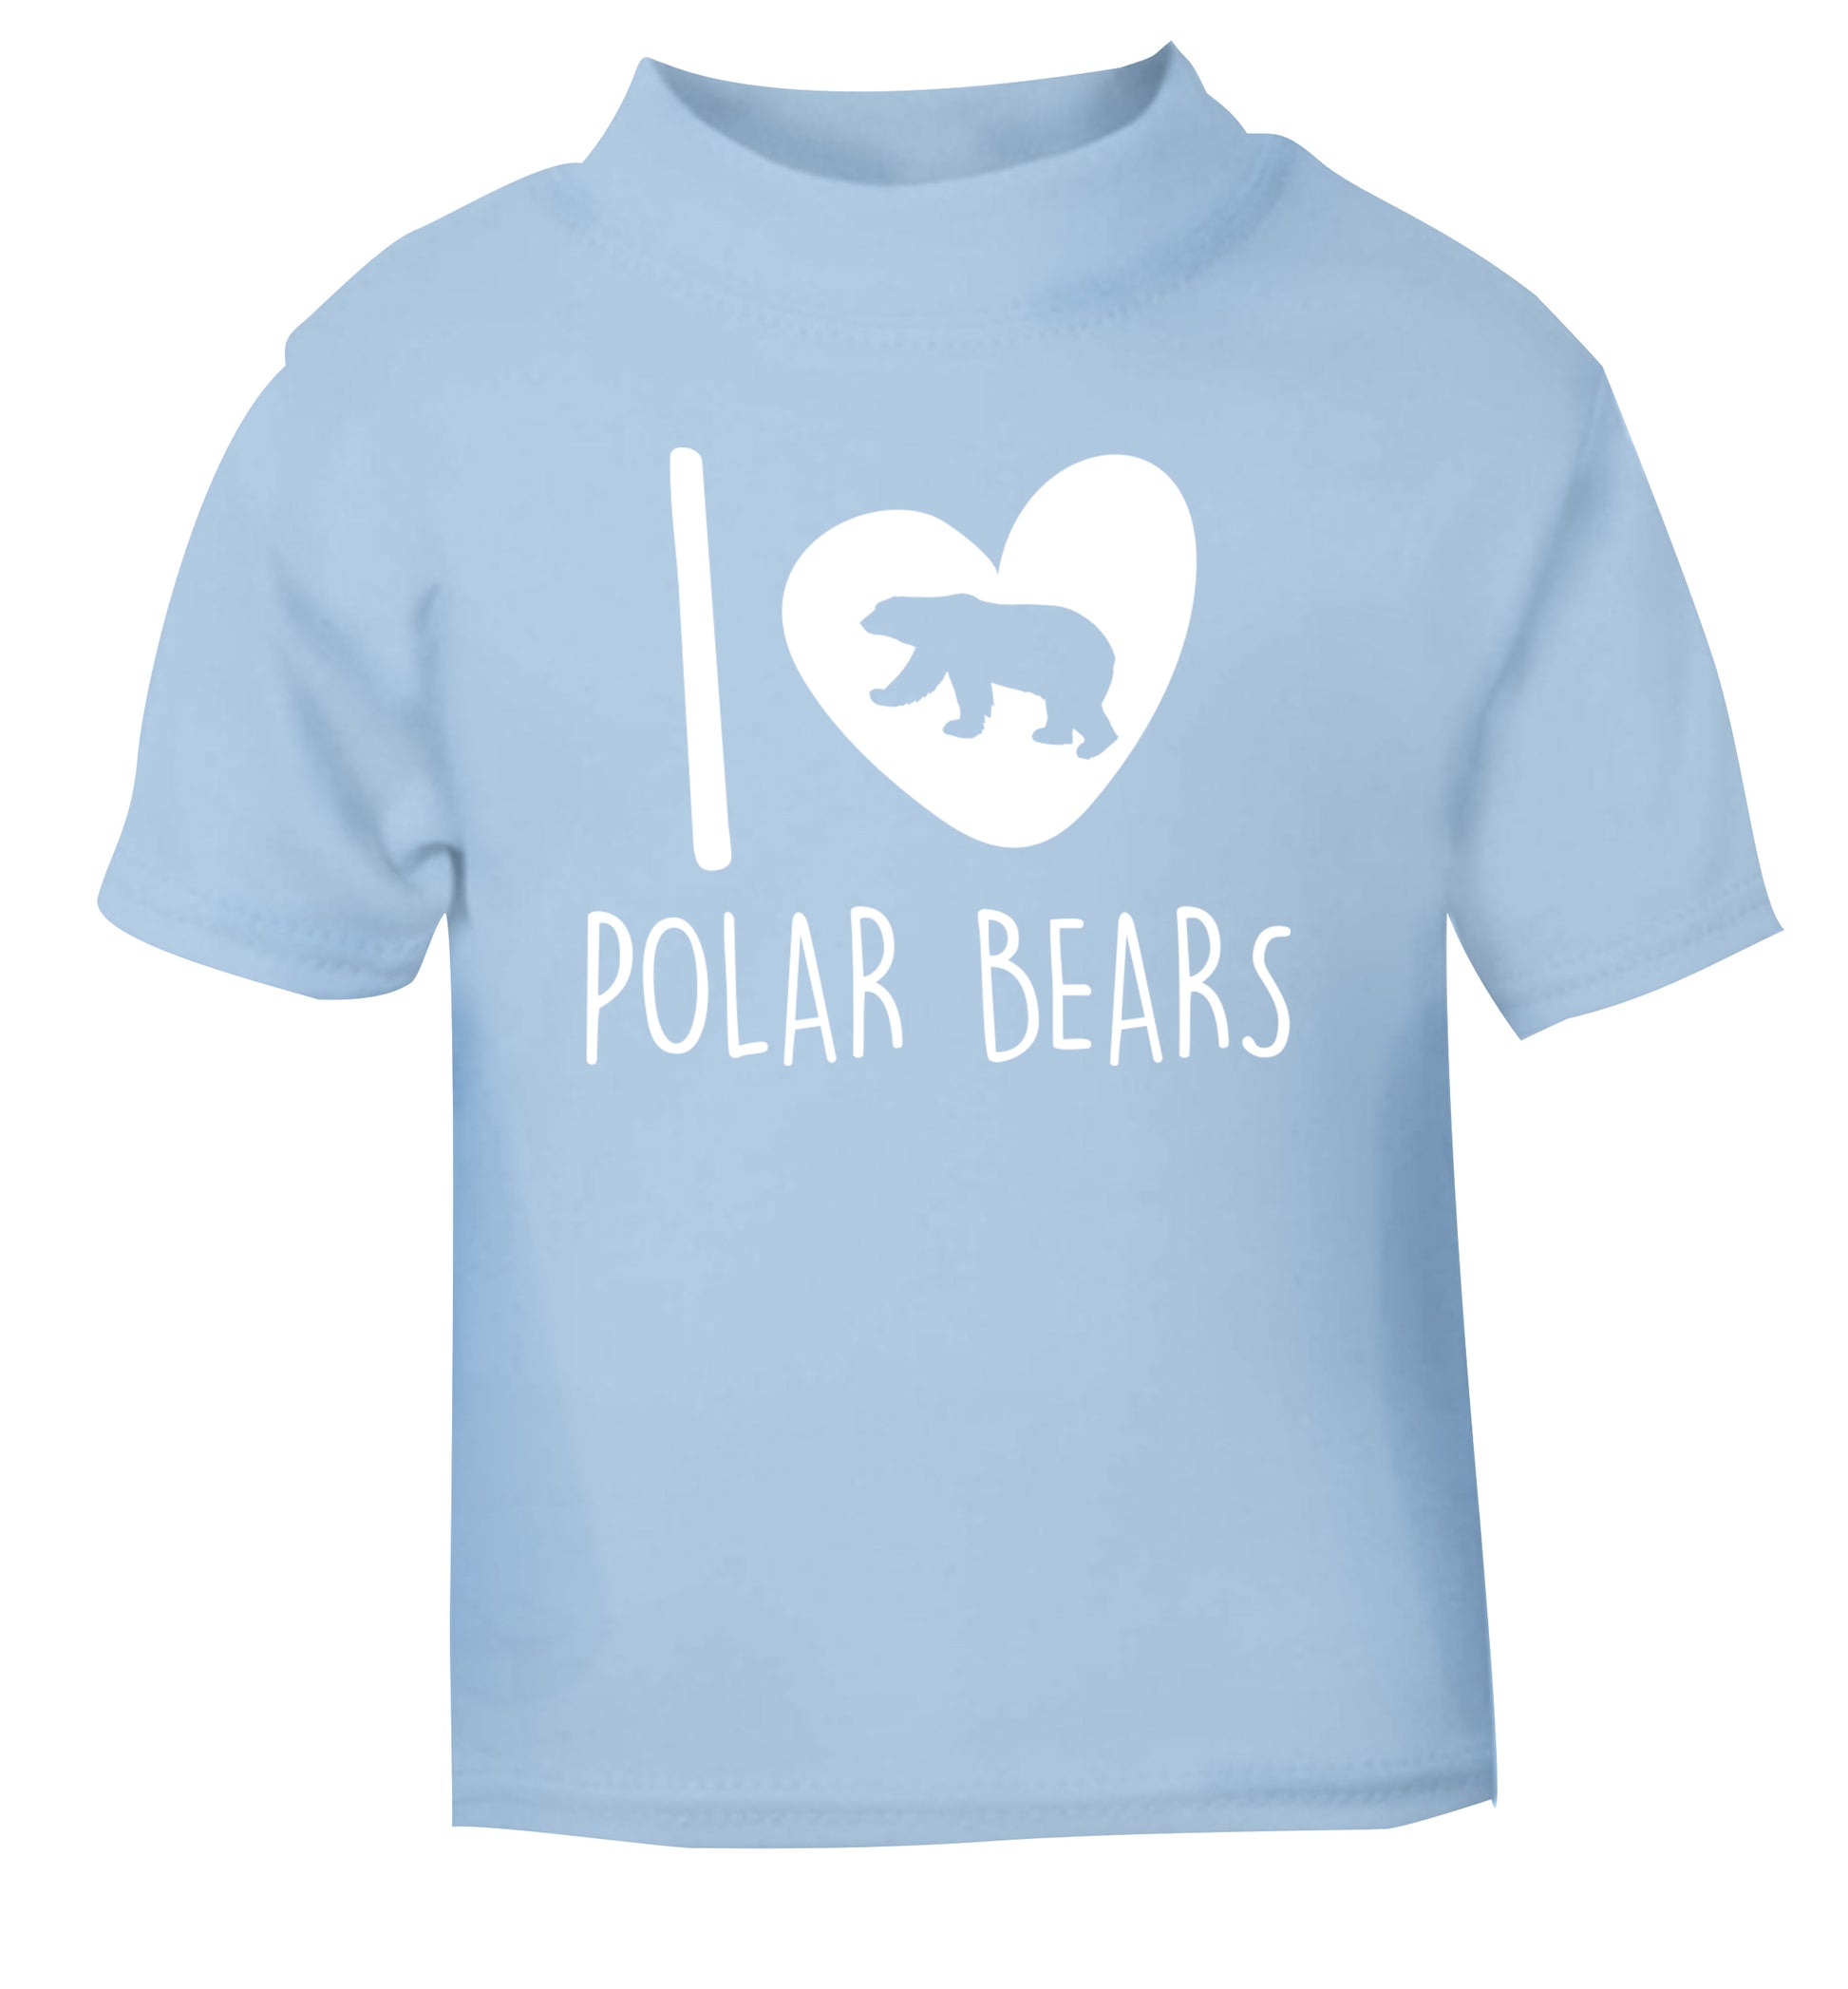 I Love Polar Bears light blue Baby Toddler Tshirt 2 Years